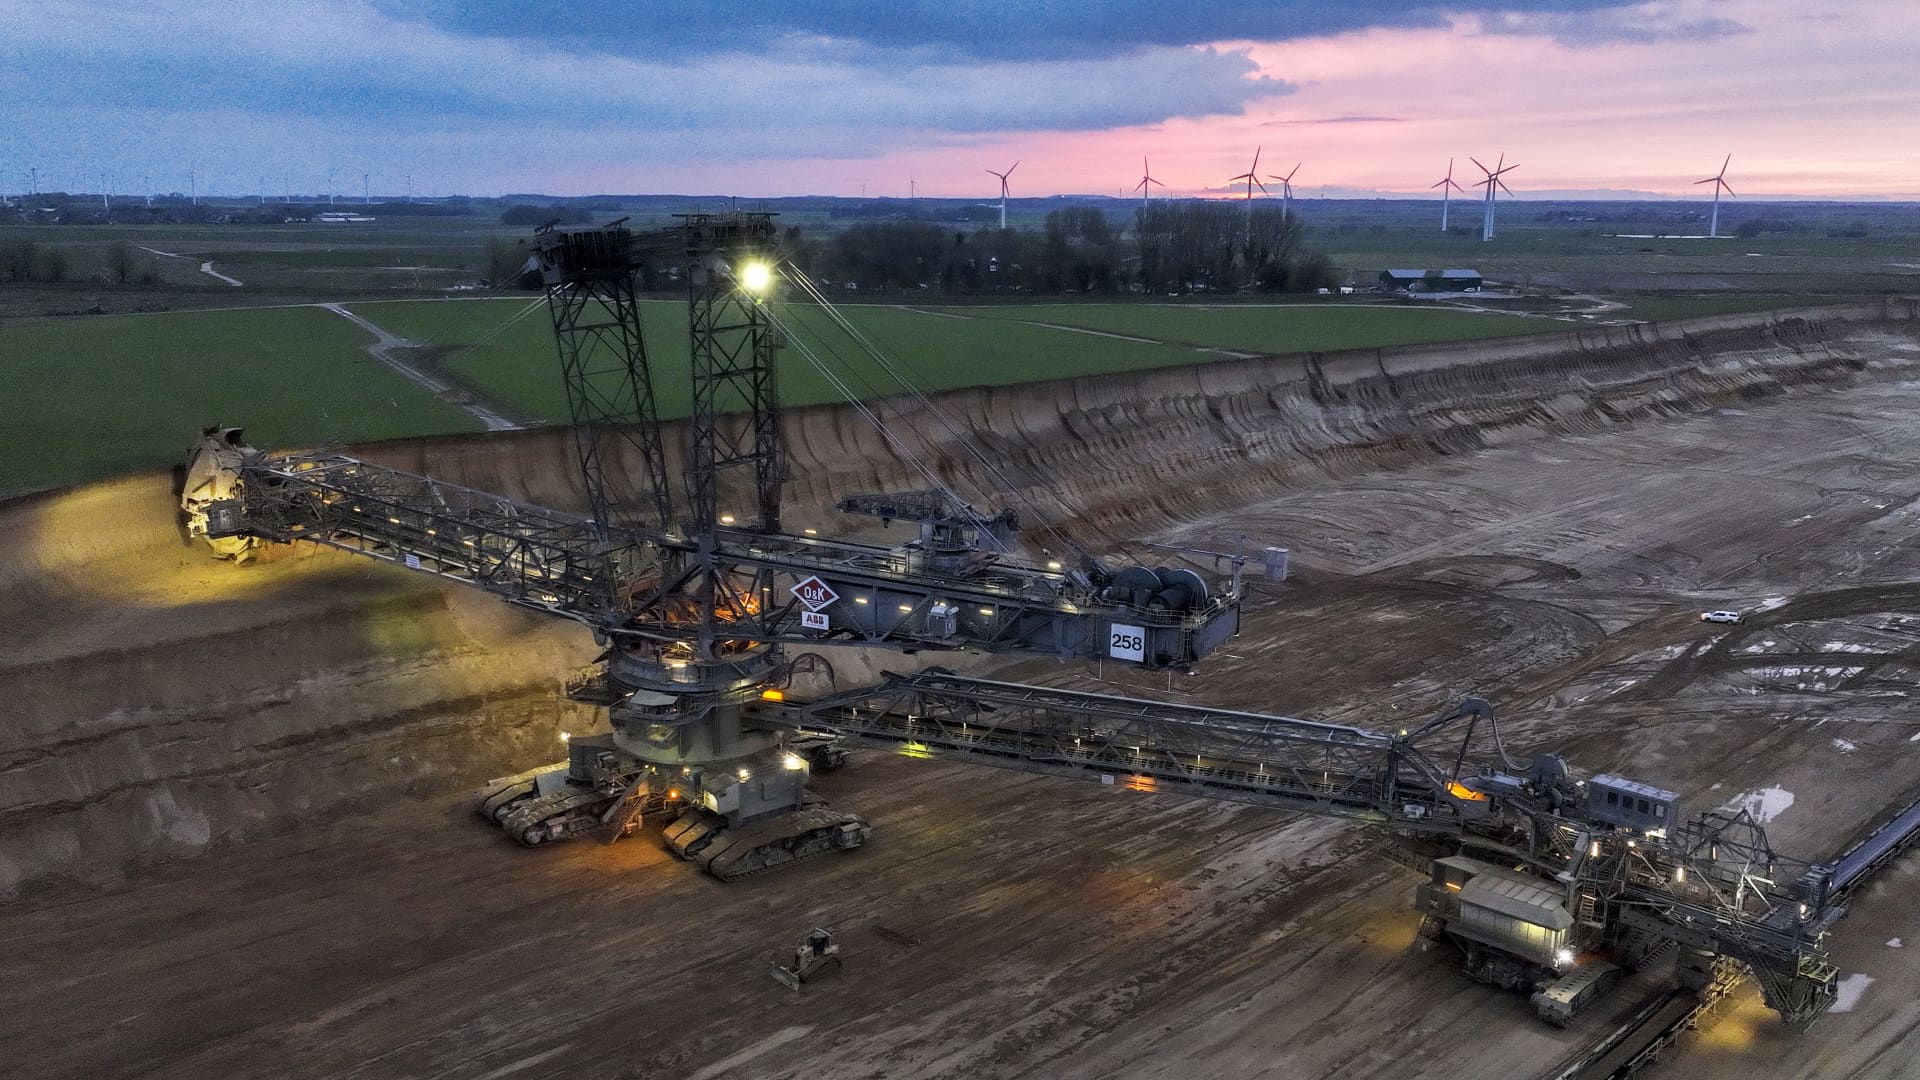 German energy giant RWE to burn extra coal as Russian gas supplies dwindle